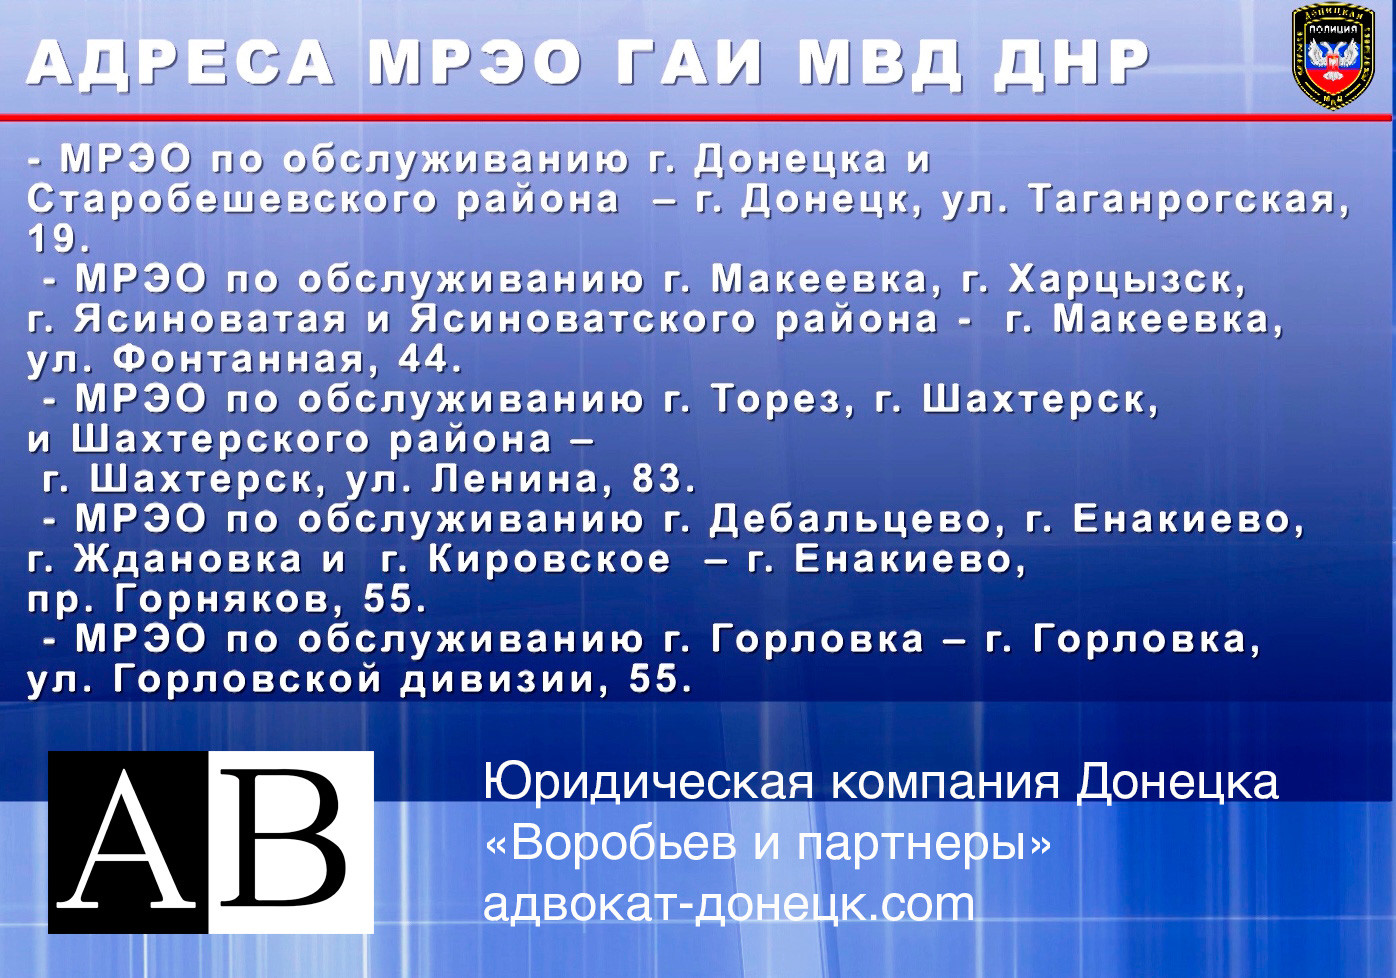 Адреса всех МРЭО ГАИ ДНР МВД на сайте адвокатов и юристов Донецка